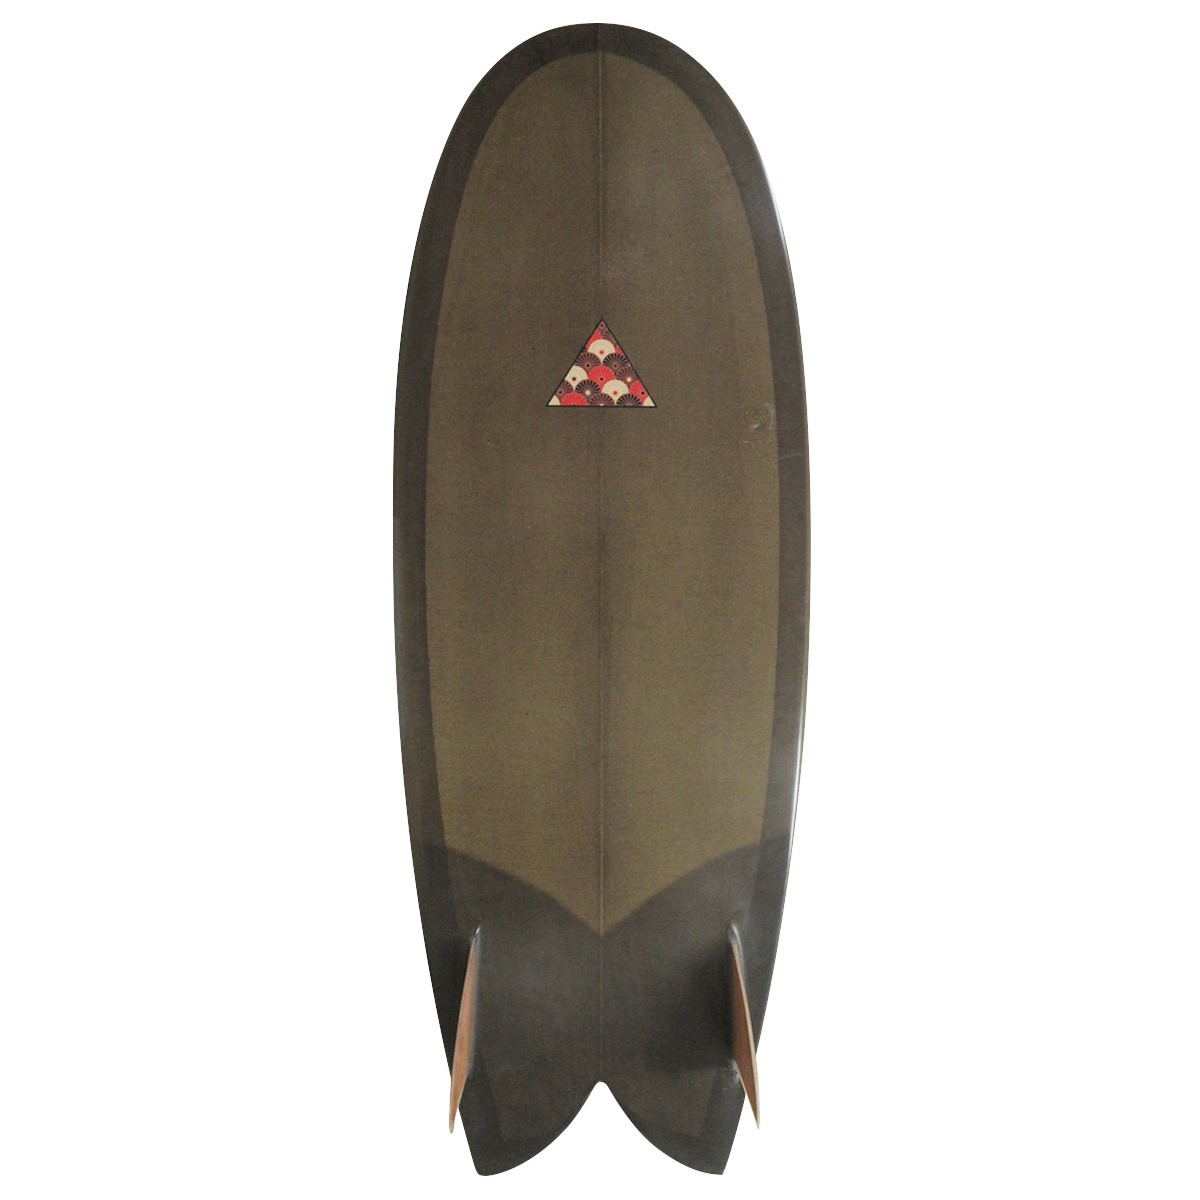 SIRAKABA SURF&WOOD CRAFT / ROUNDNOSE FISH 5`2